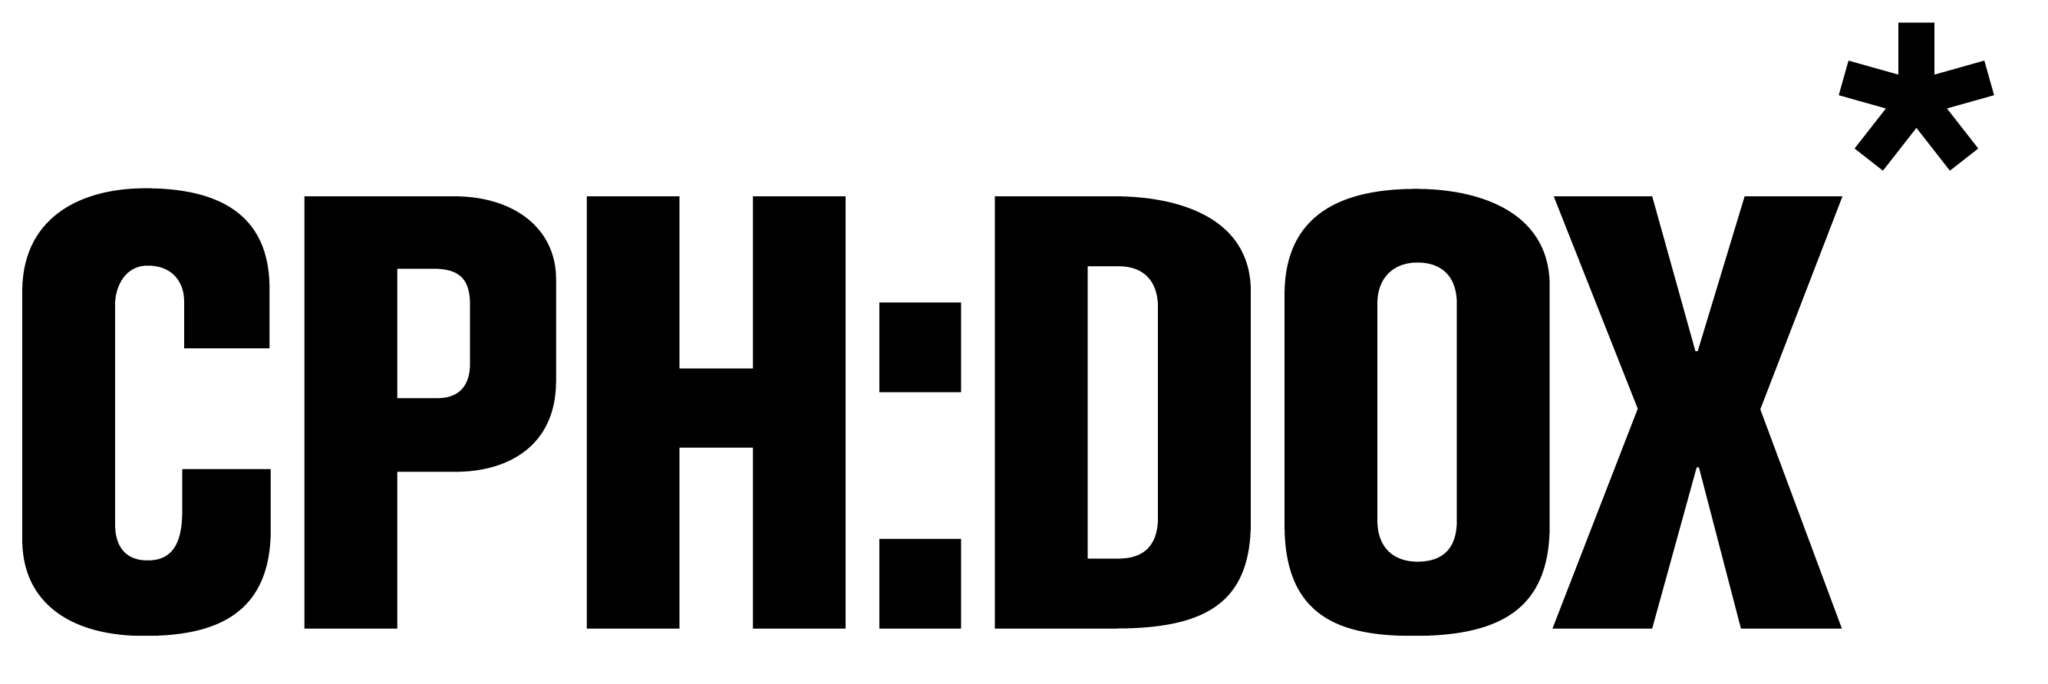 DOX_logo2017_BLACK.png